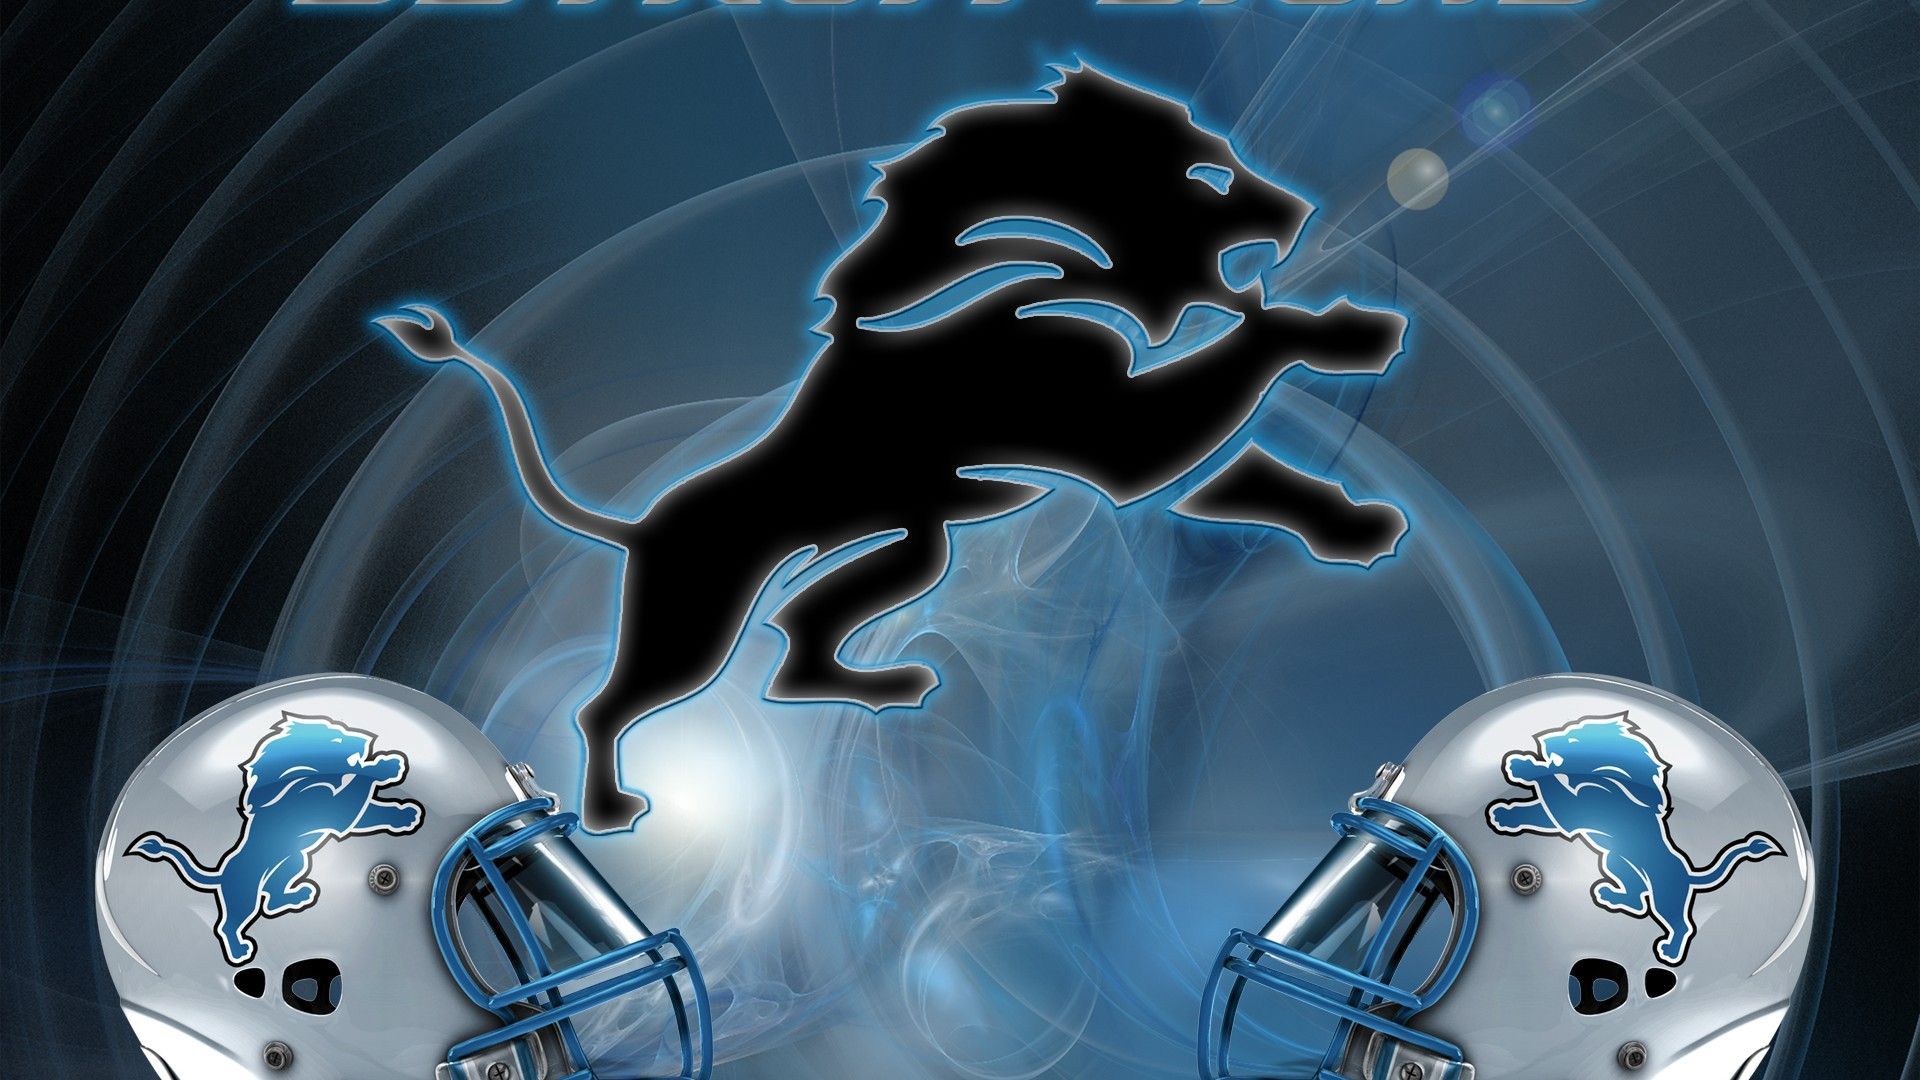 Detroit Lions Mac Background NFL Football Wallpaper. Detroit lions wallpaper, Detroit lions, Lions